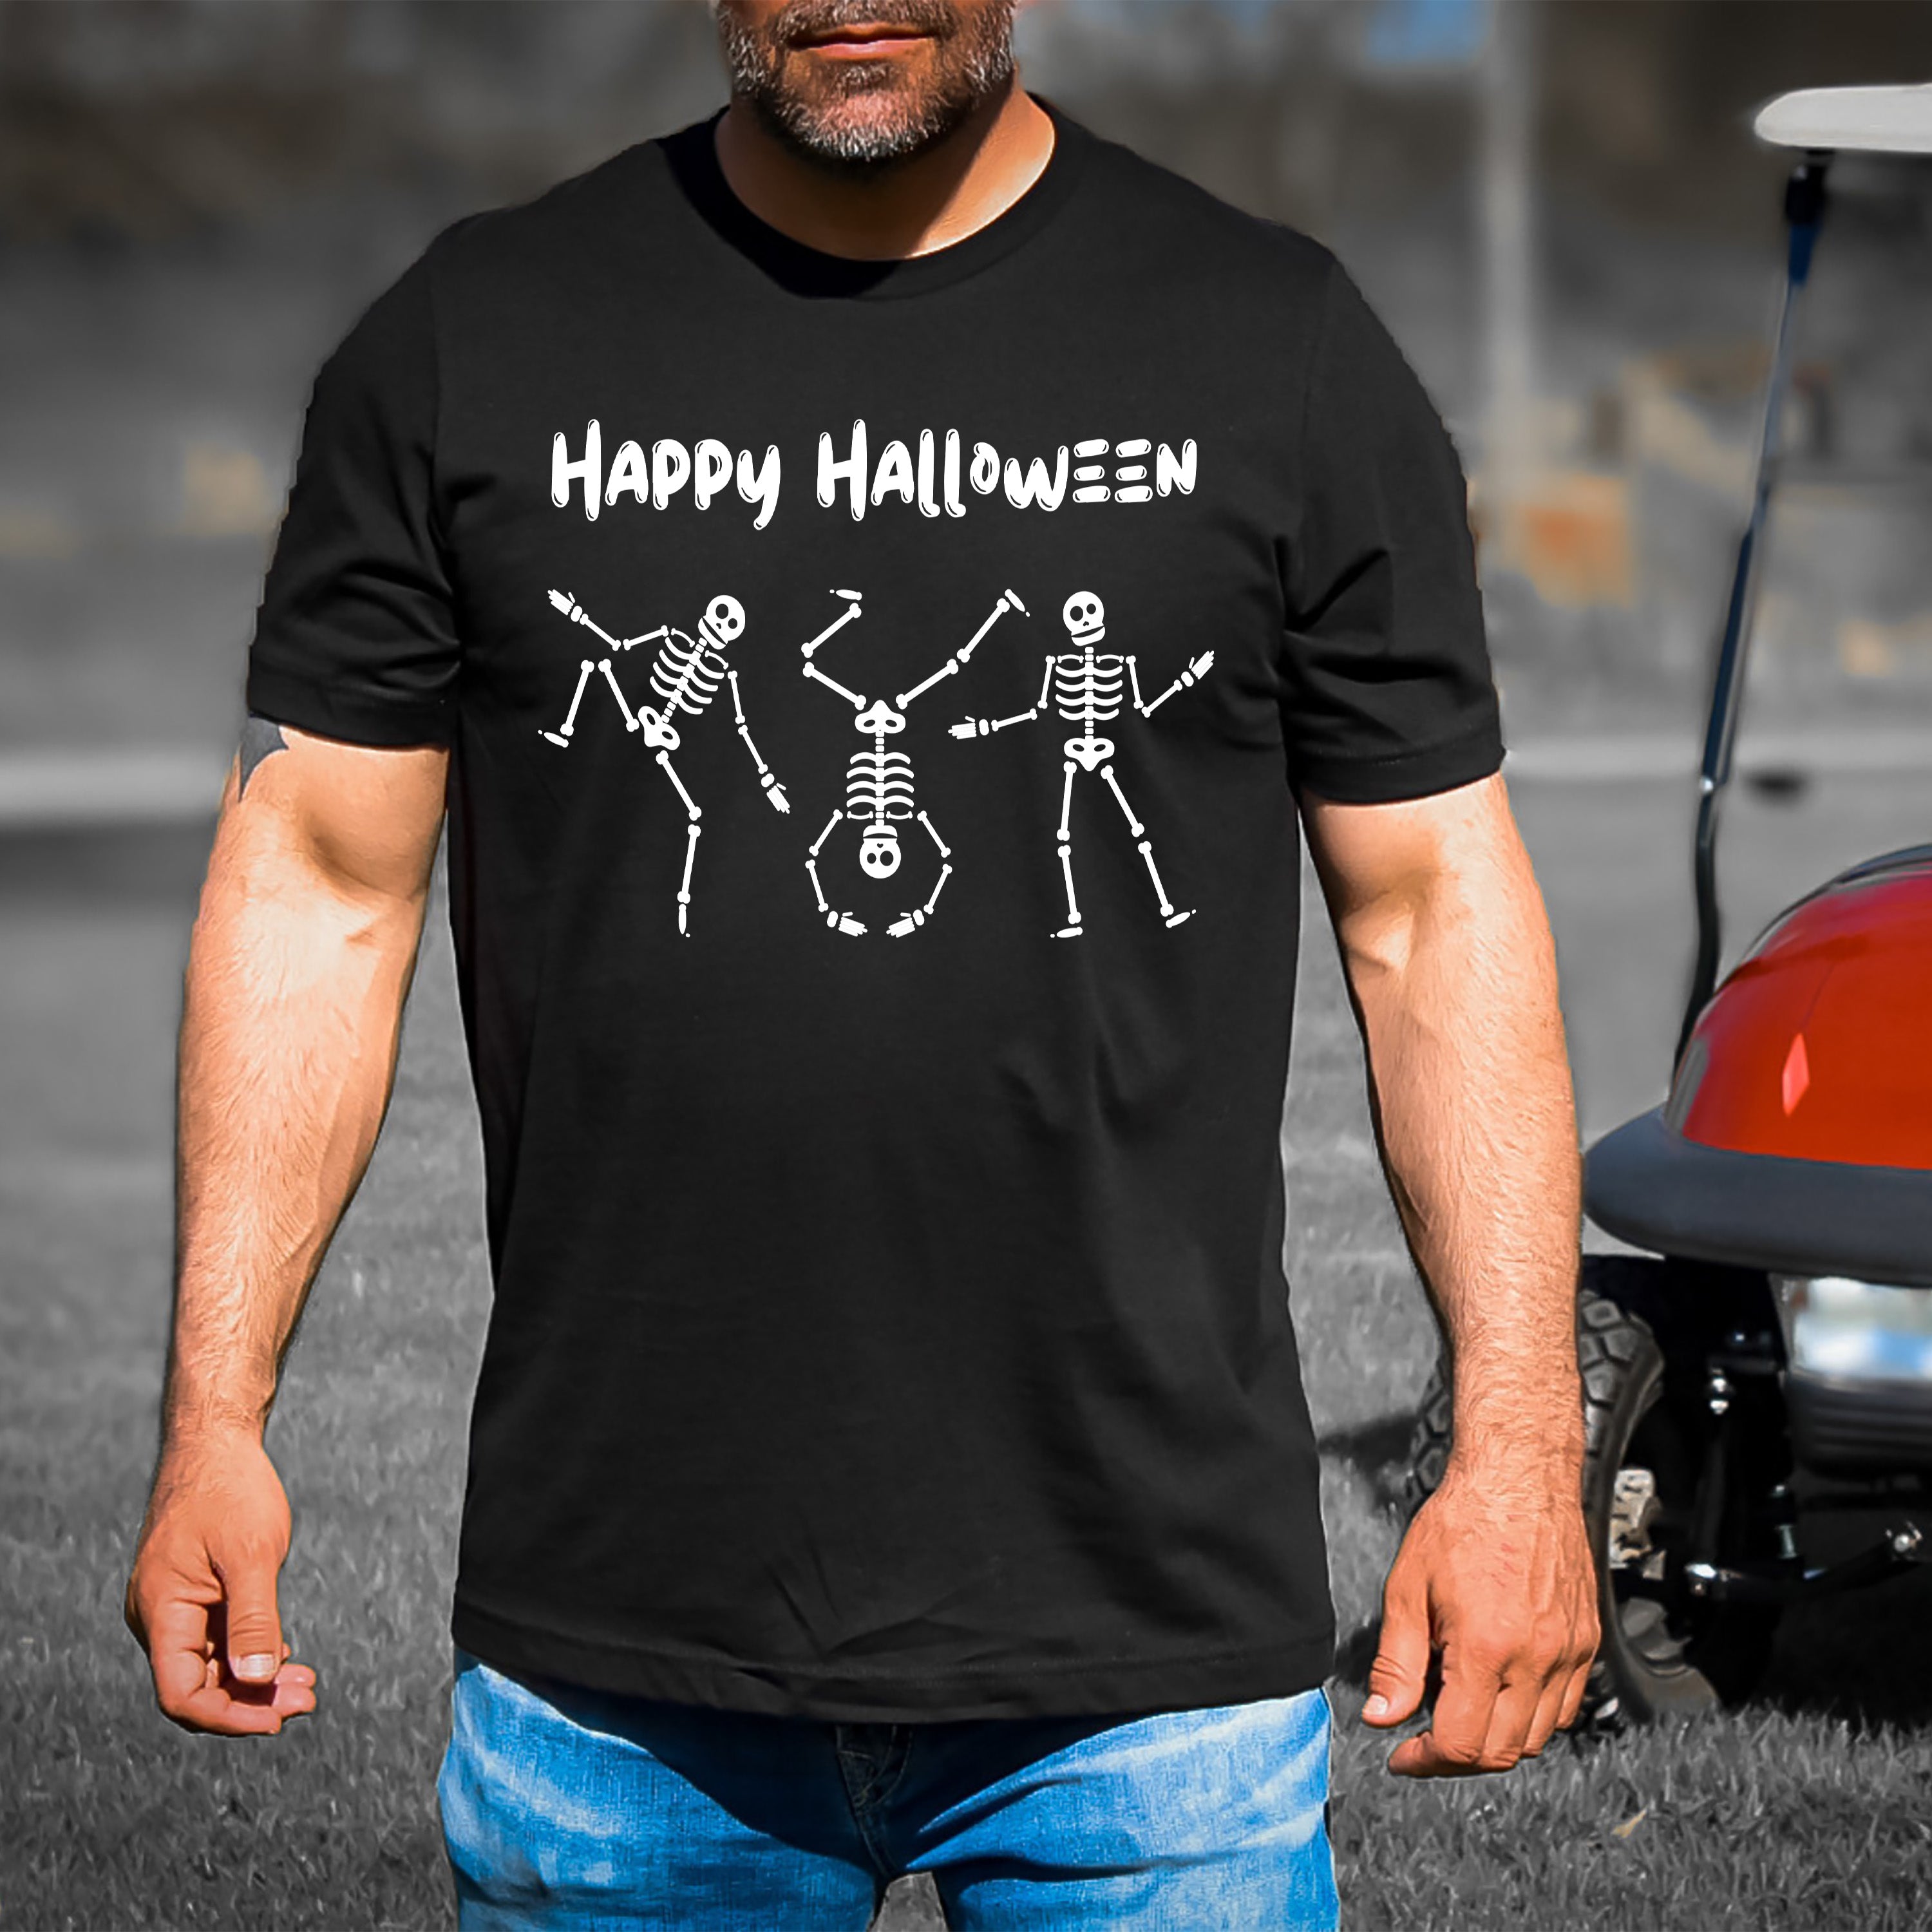 Happy Halloween - Unisex T-Shirt